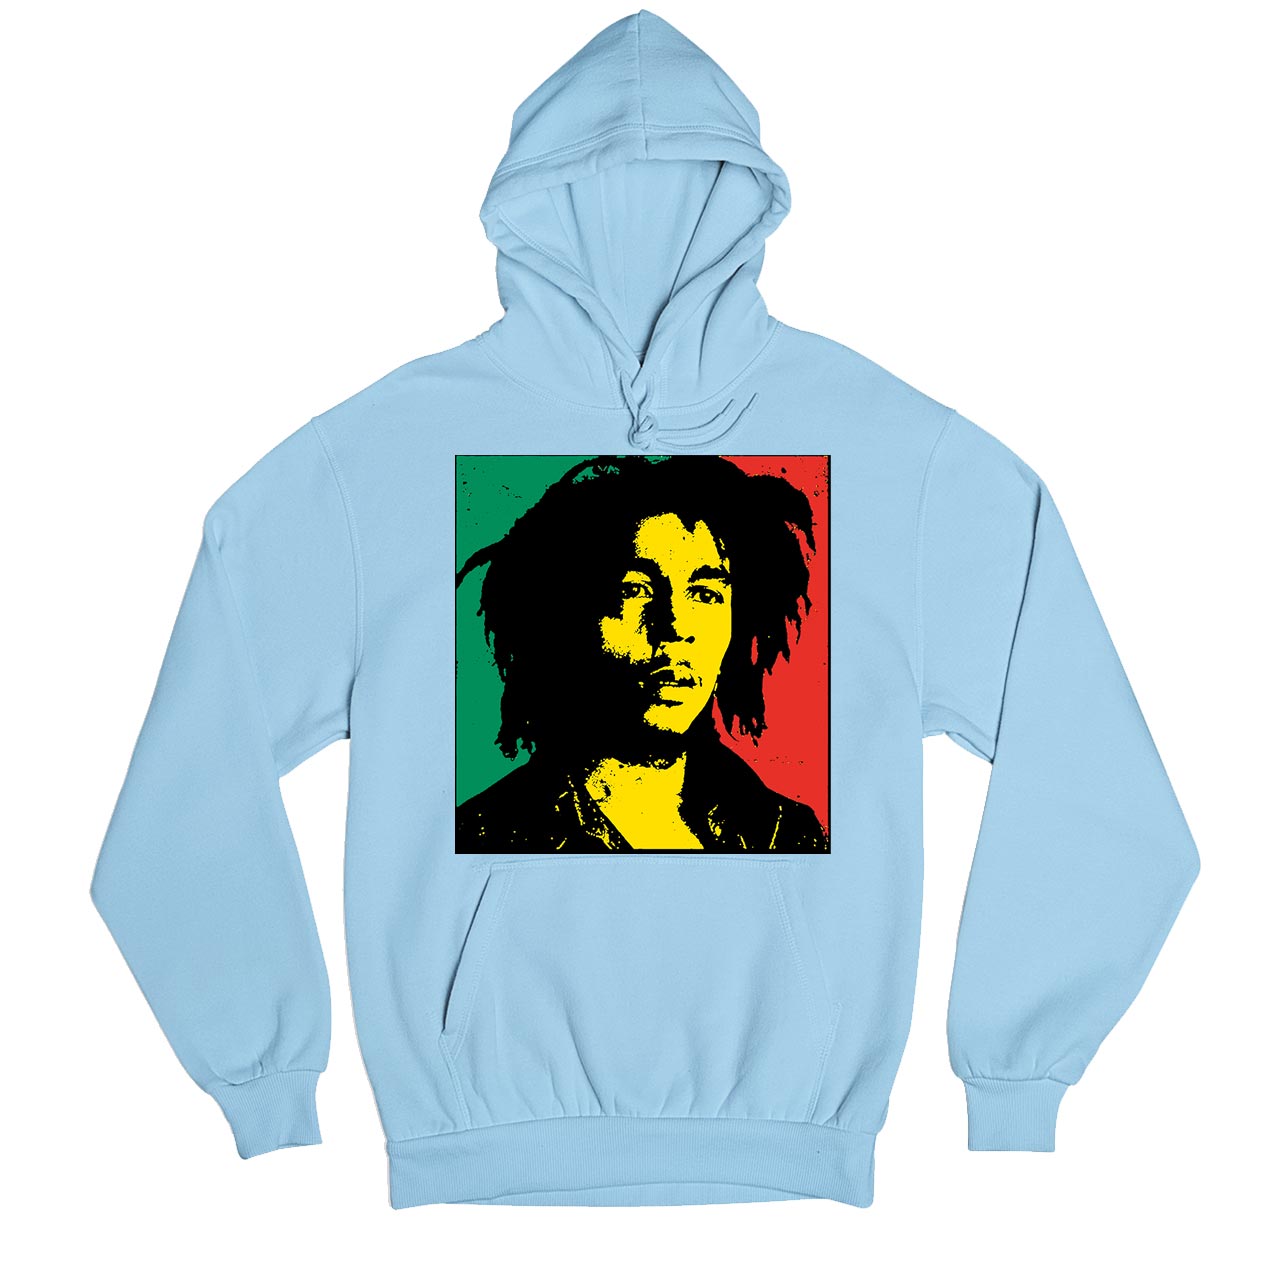 bob marley pop art hoodie hooded sweatshirt winterwear music band buy online india the banyan tee tbt men women girls boys unisex baby blue